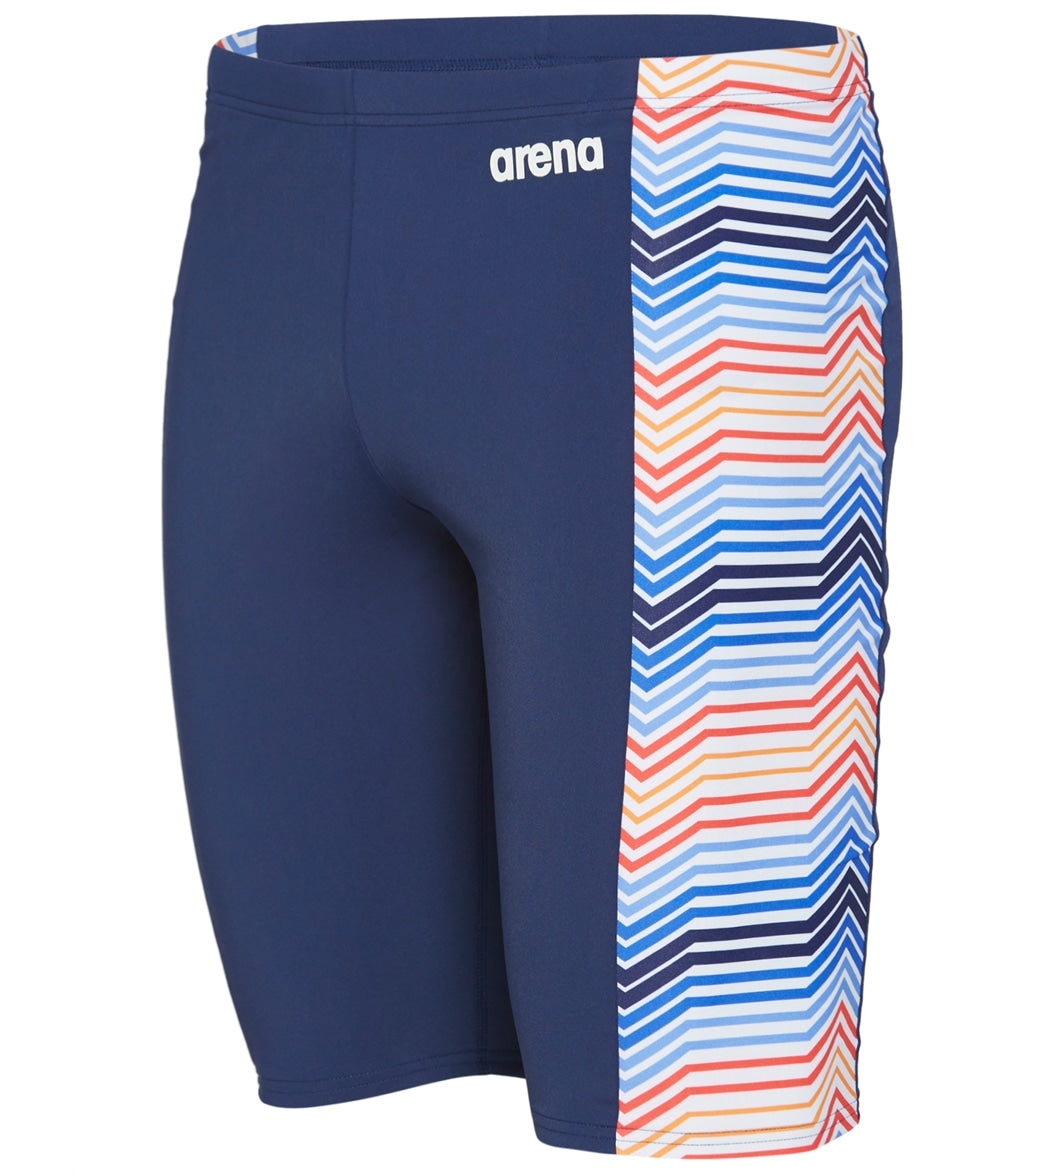 Arena Men's Multicolor Stripes Maxlife Jammer Swimsuit - Navy/Navy/Multi 20 - Swimoutlet.com